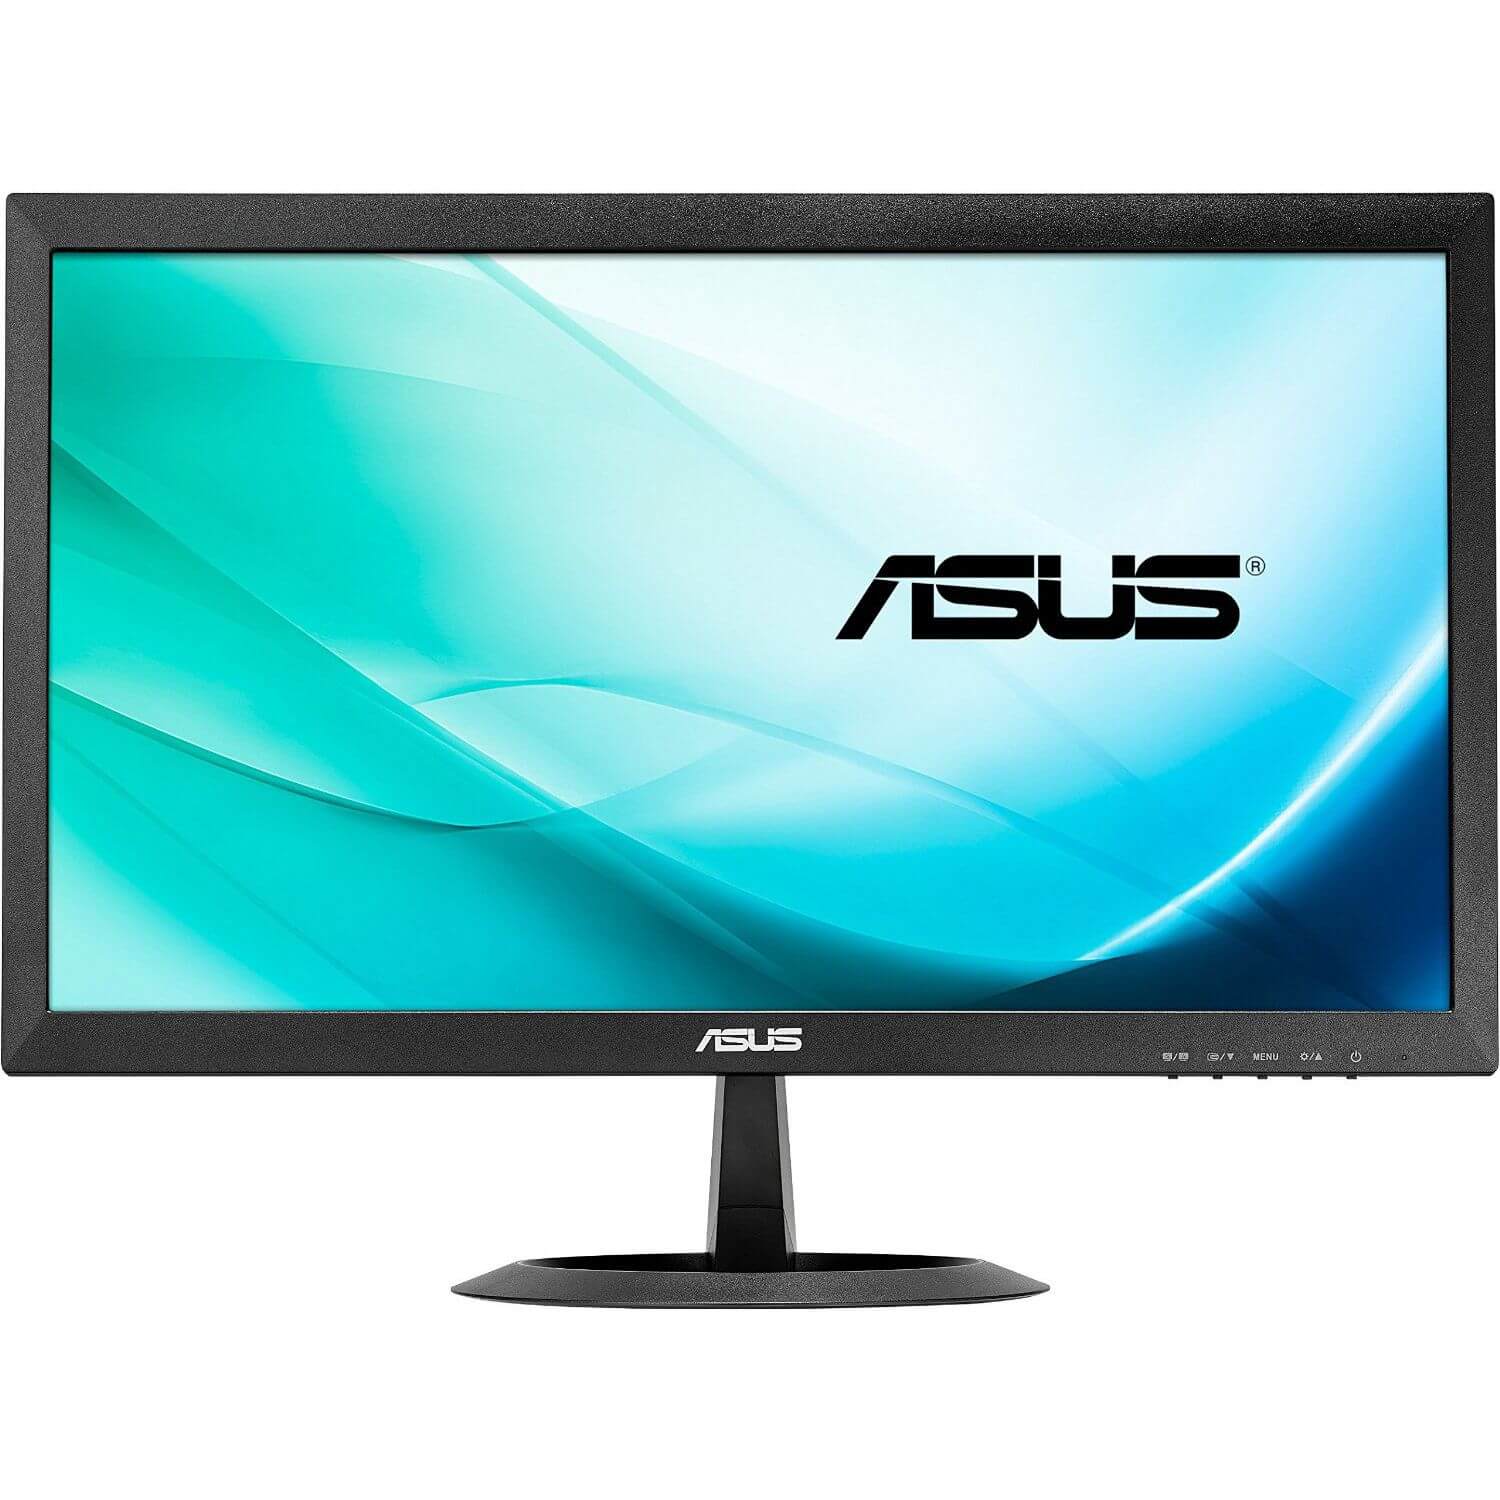  Monitor LED Asus VX207TE, 19.5", HD, Negru 